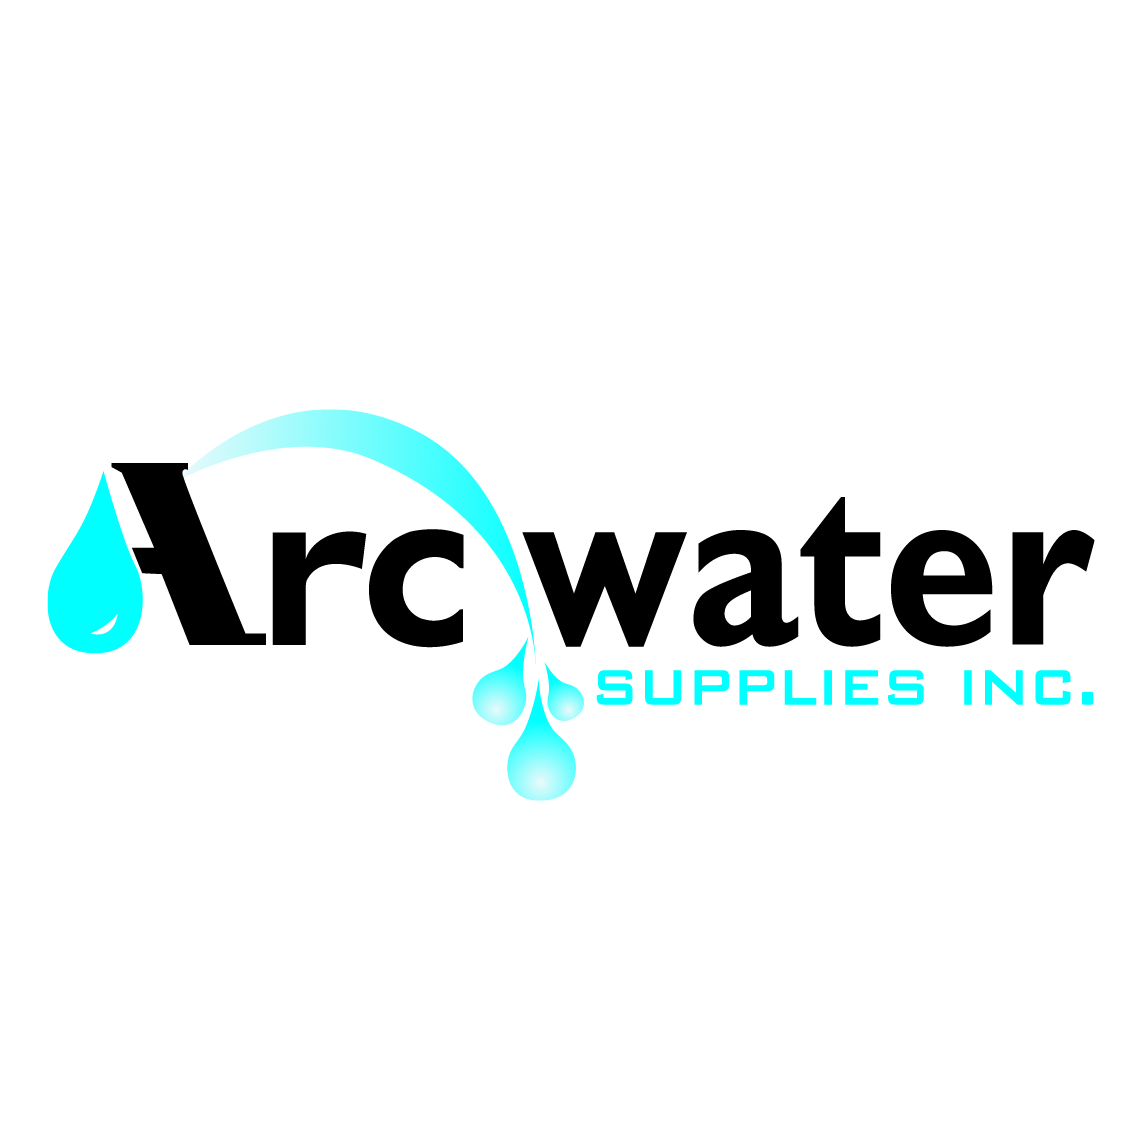 Arcwater Supplies Inc